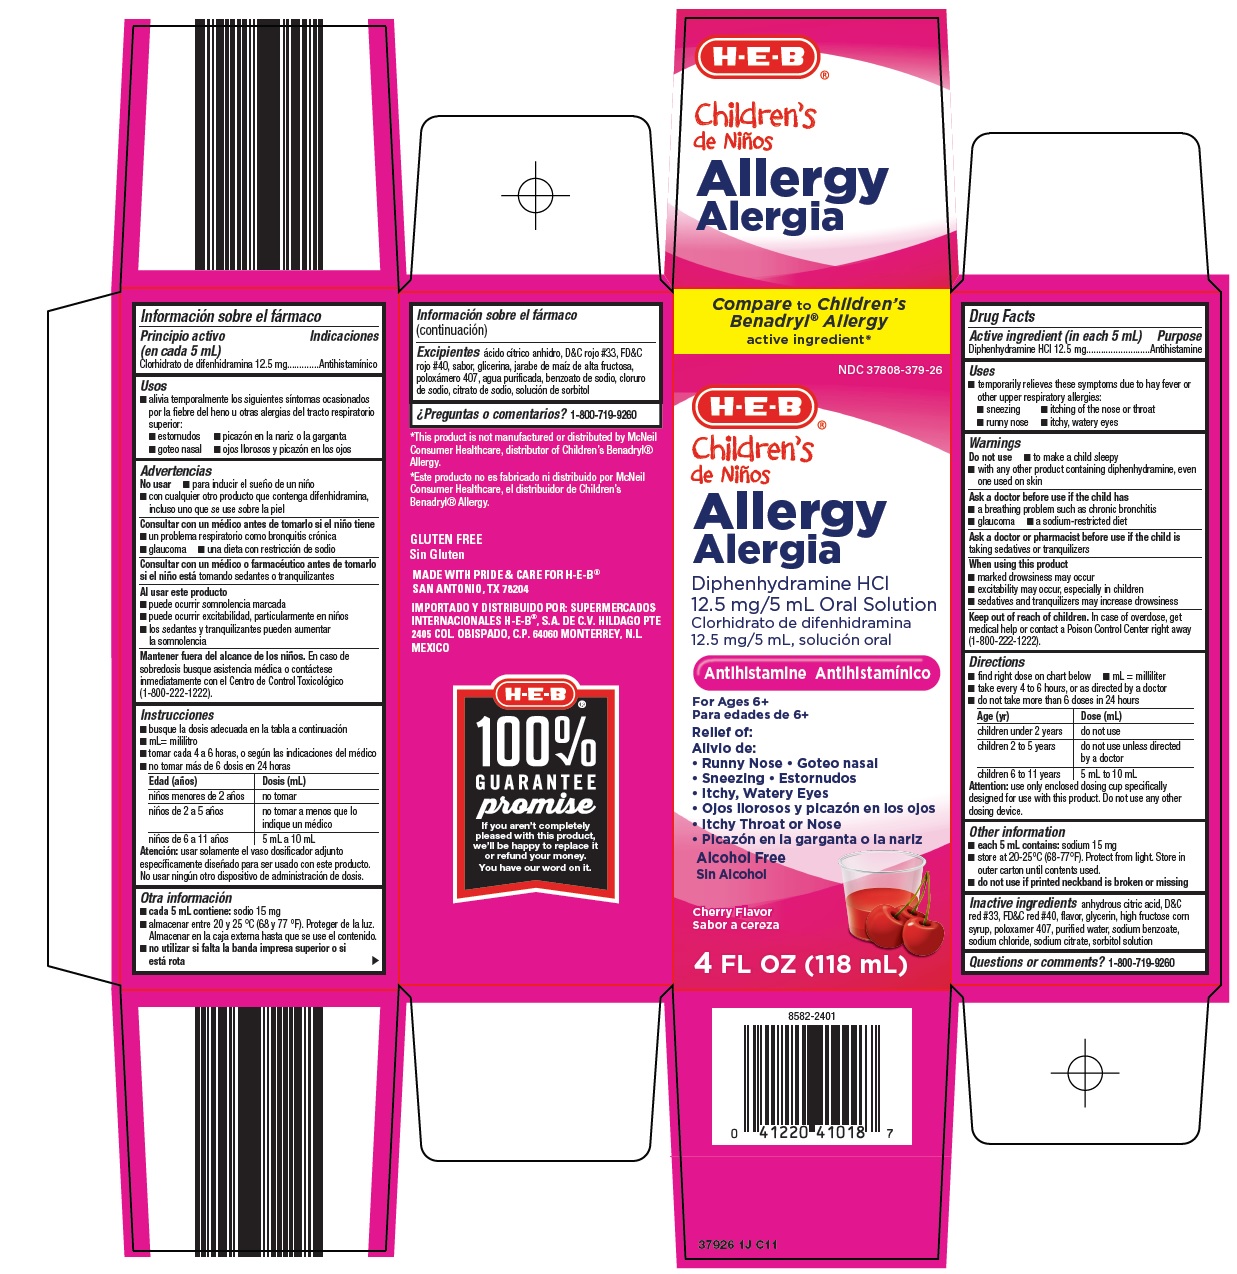 Children's Allergy Cherry Carton Image